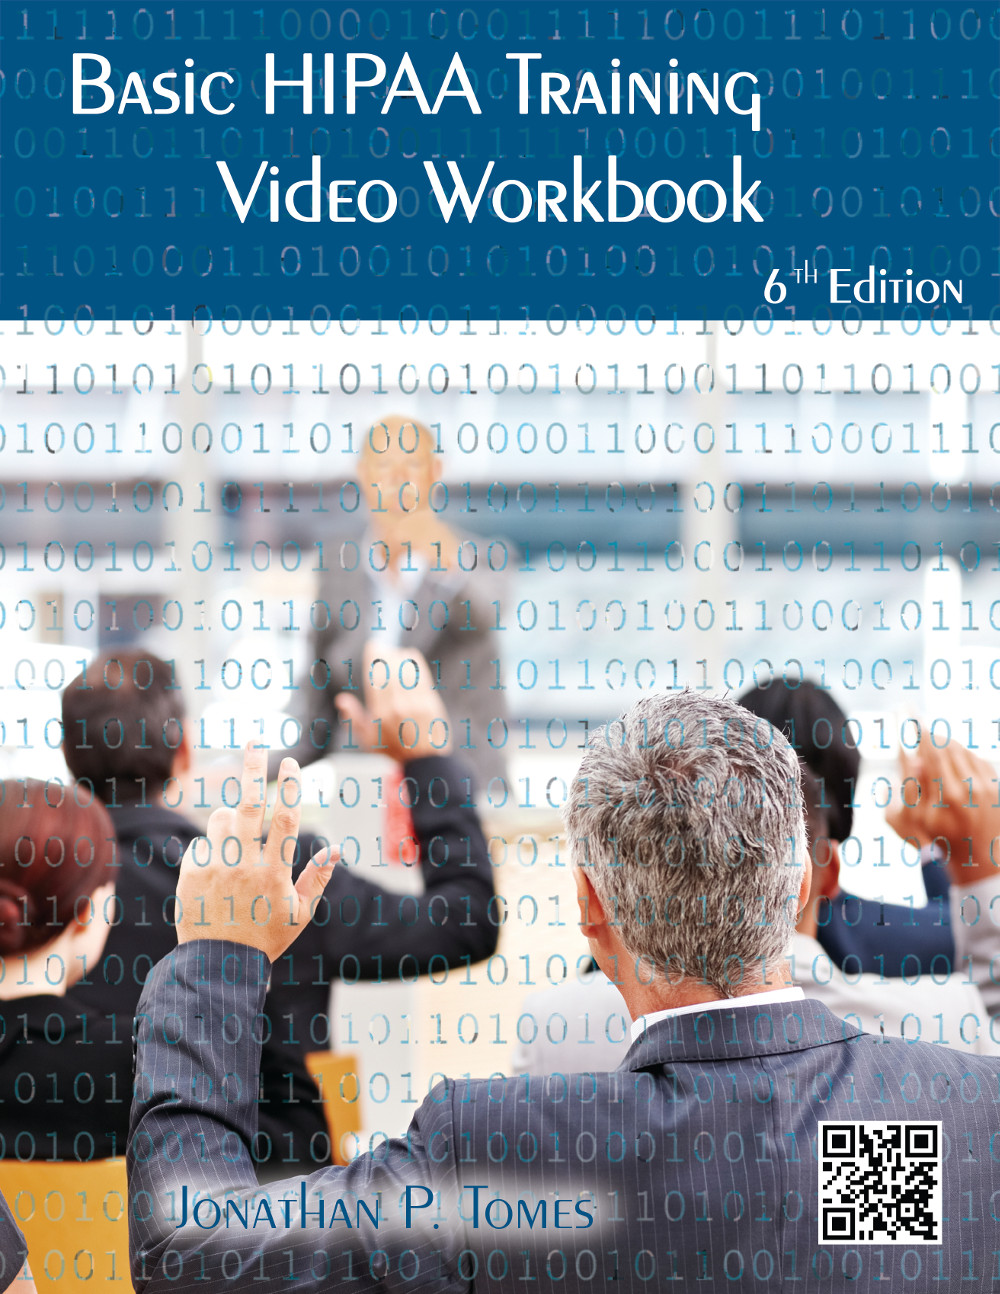 Basic HIPAA Training Video DVD and Workbook, 6th ed.